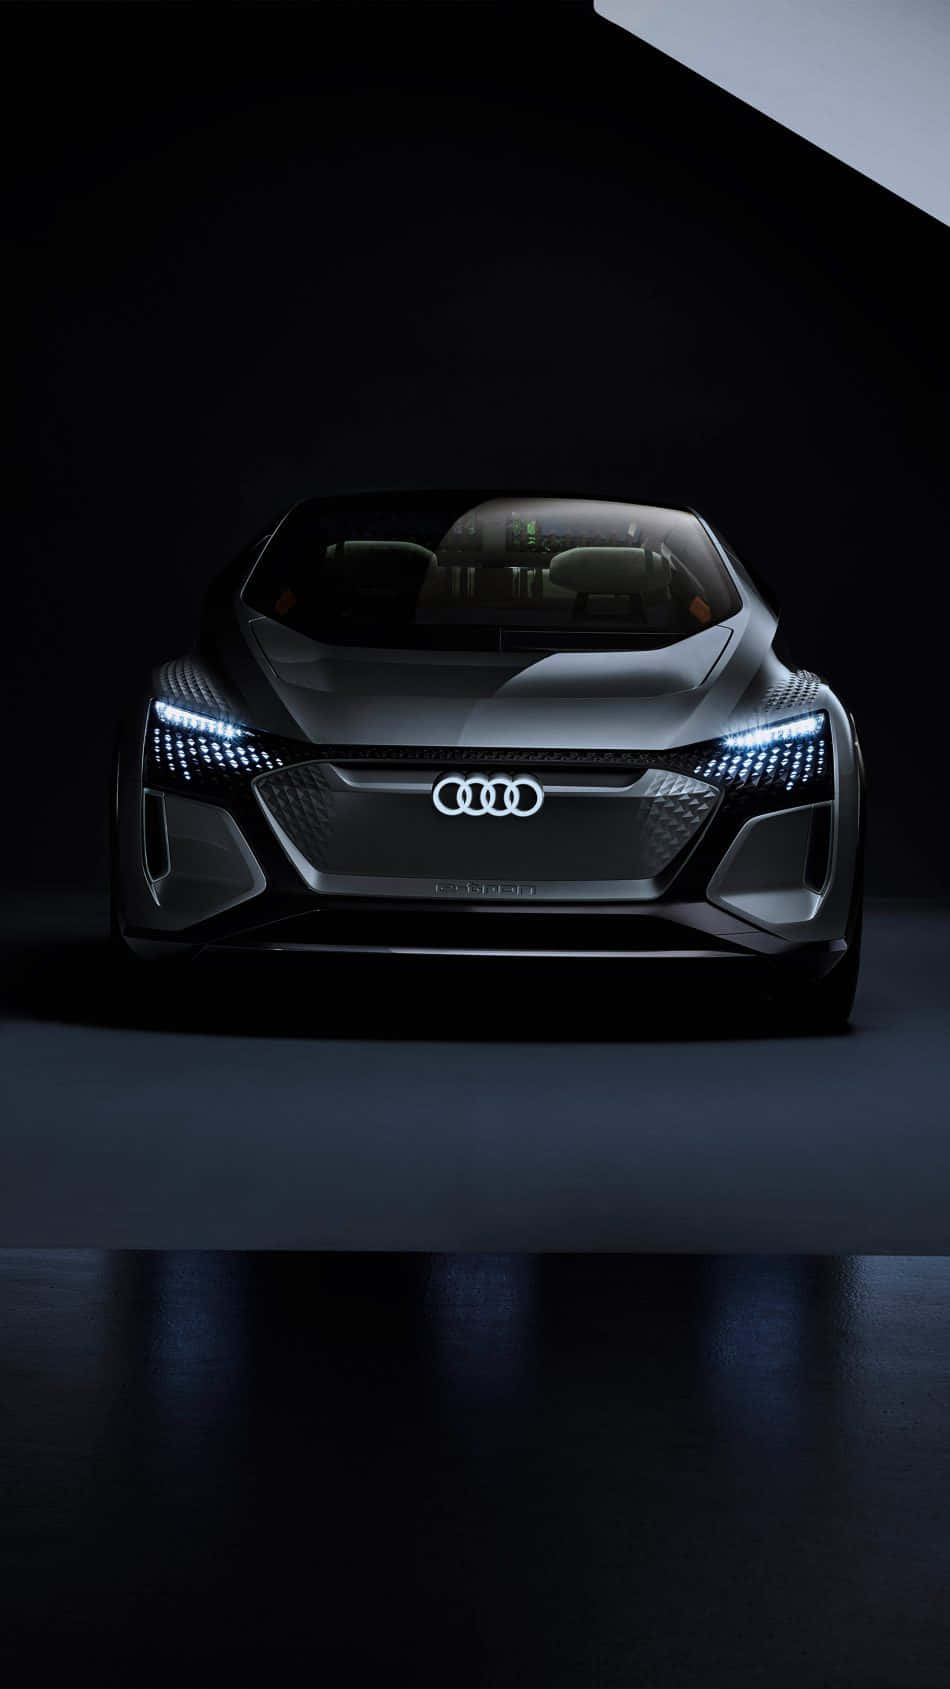 Audi Futuristic Concept Car Dark Backdrop Wallpaper